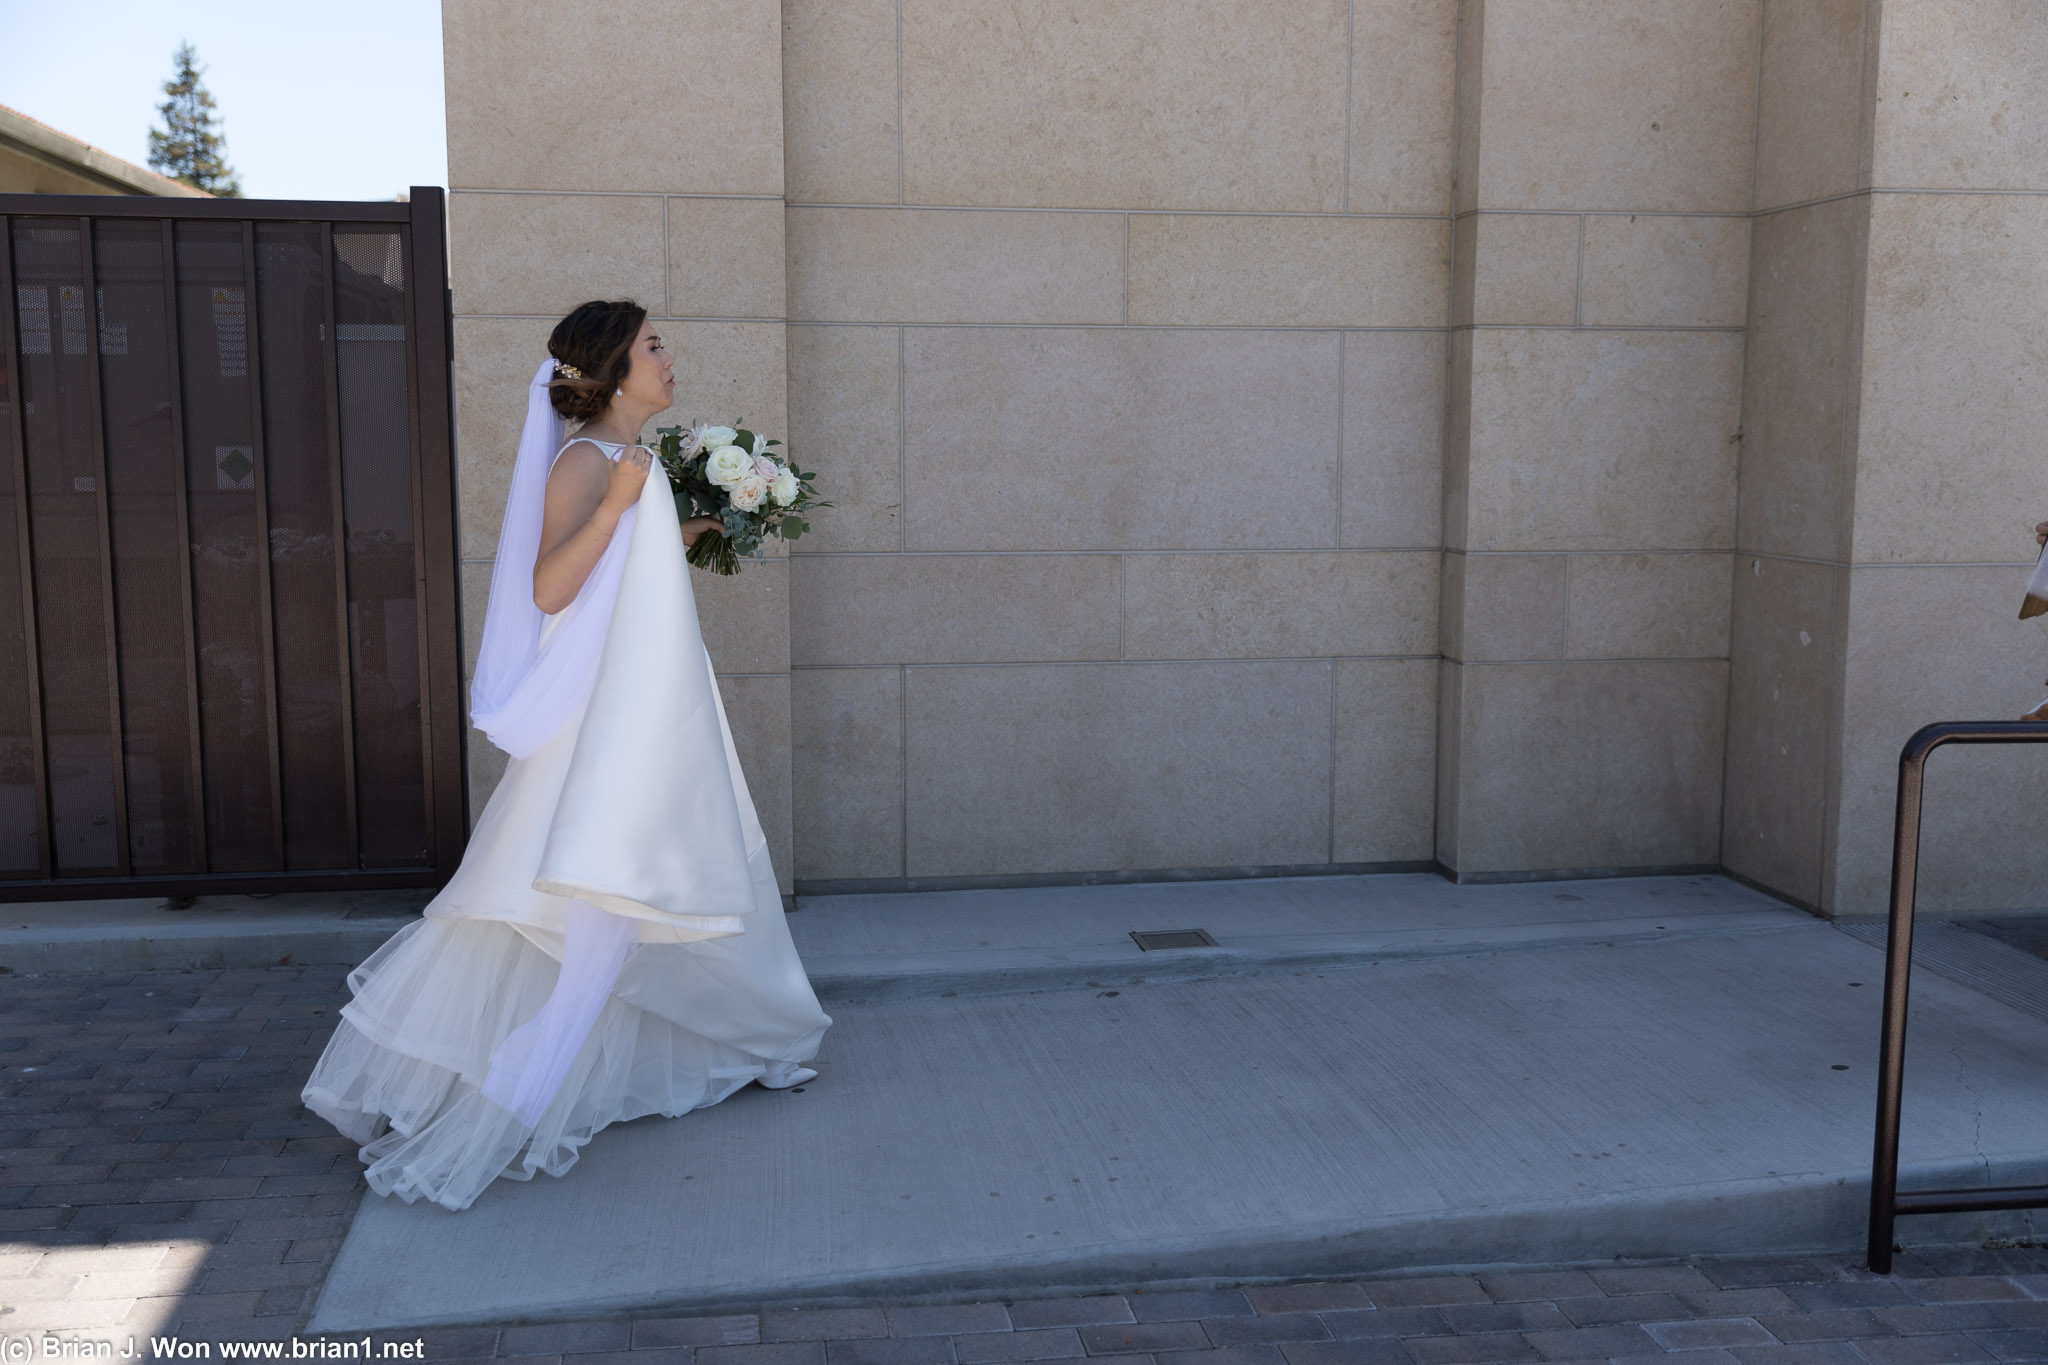 The bride preparing to make her grand entrance.